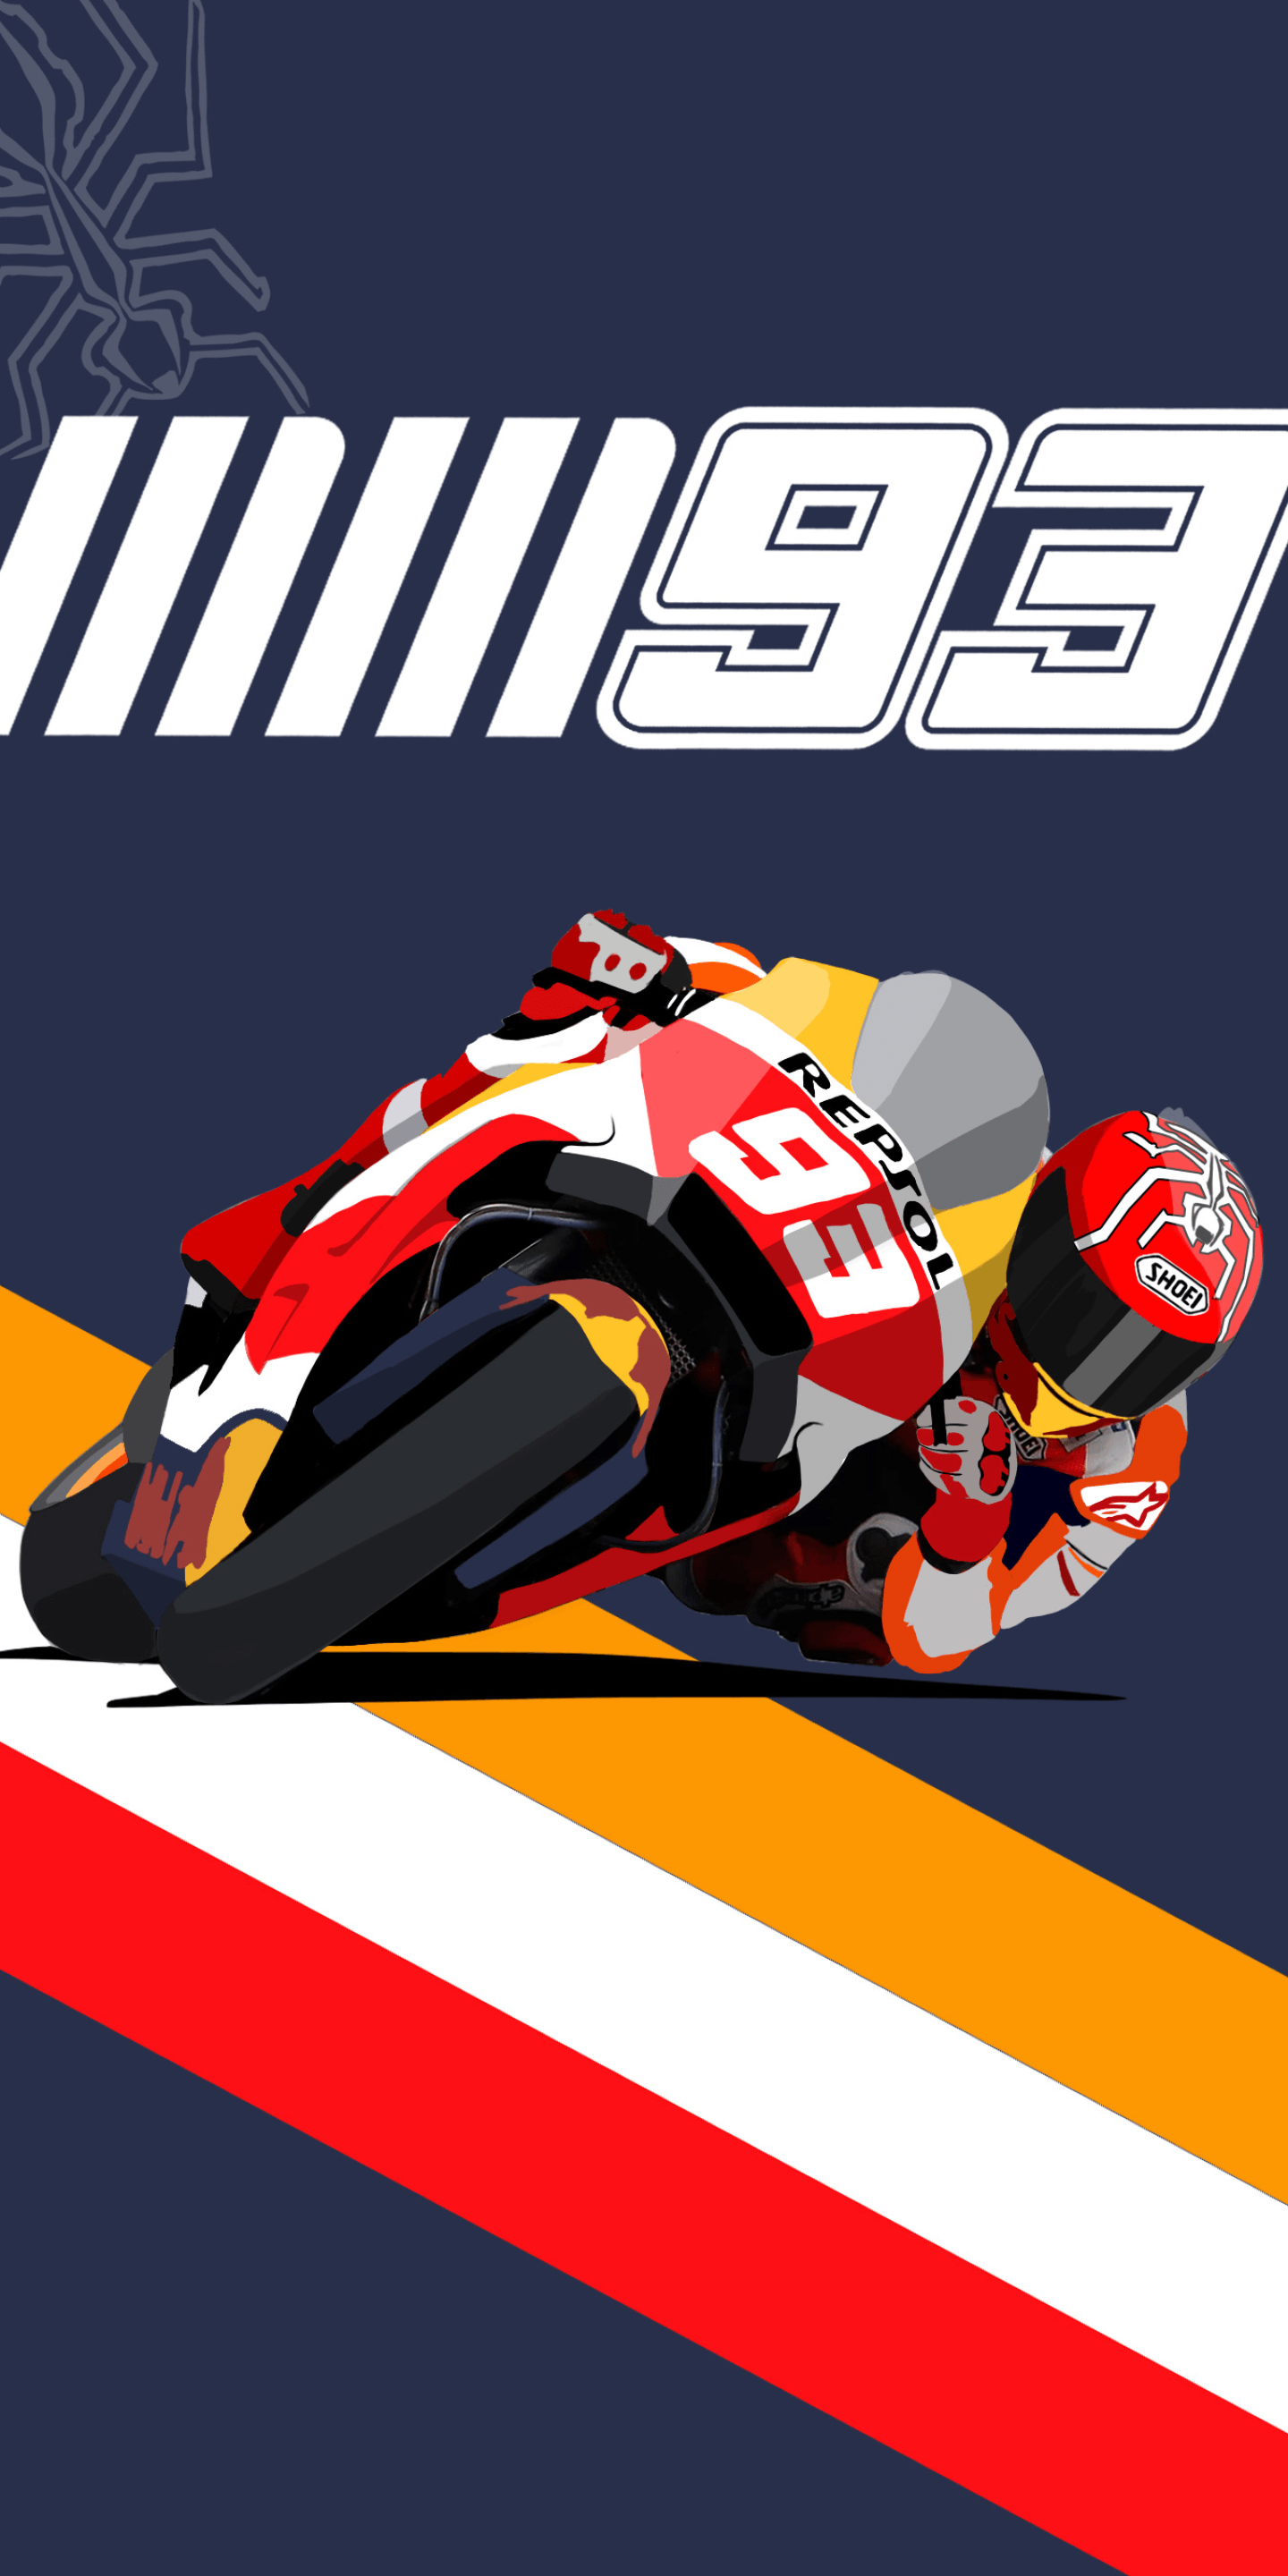 Sticker MM93 (Marc Marquez) สติ๊กเกอร์นักแข่ง MotoGP นักแข่งอันดับ 1 ของโลก  | Lazada.co.th